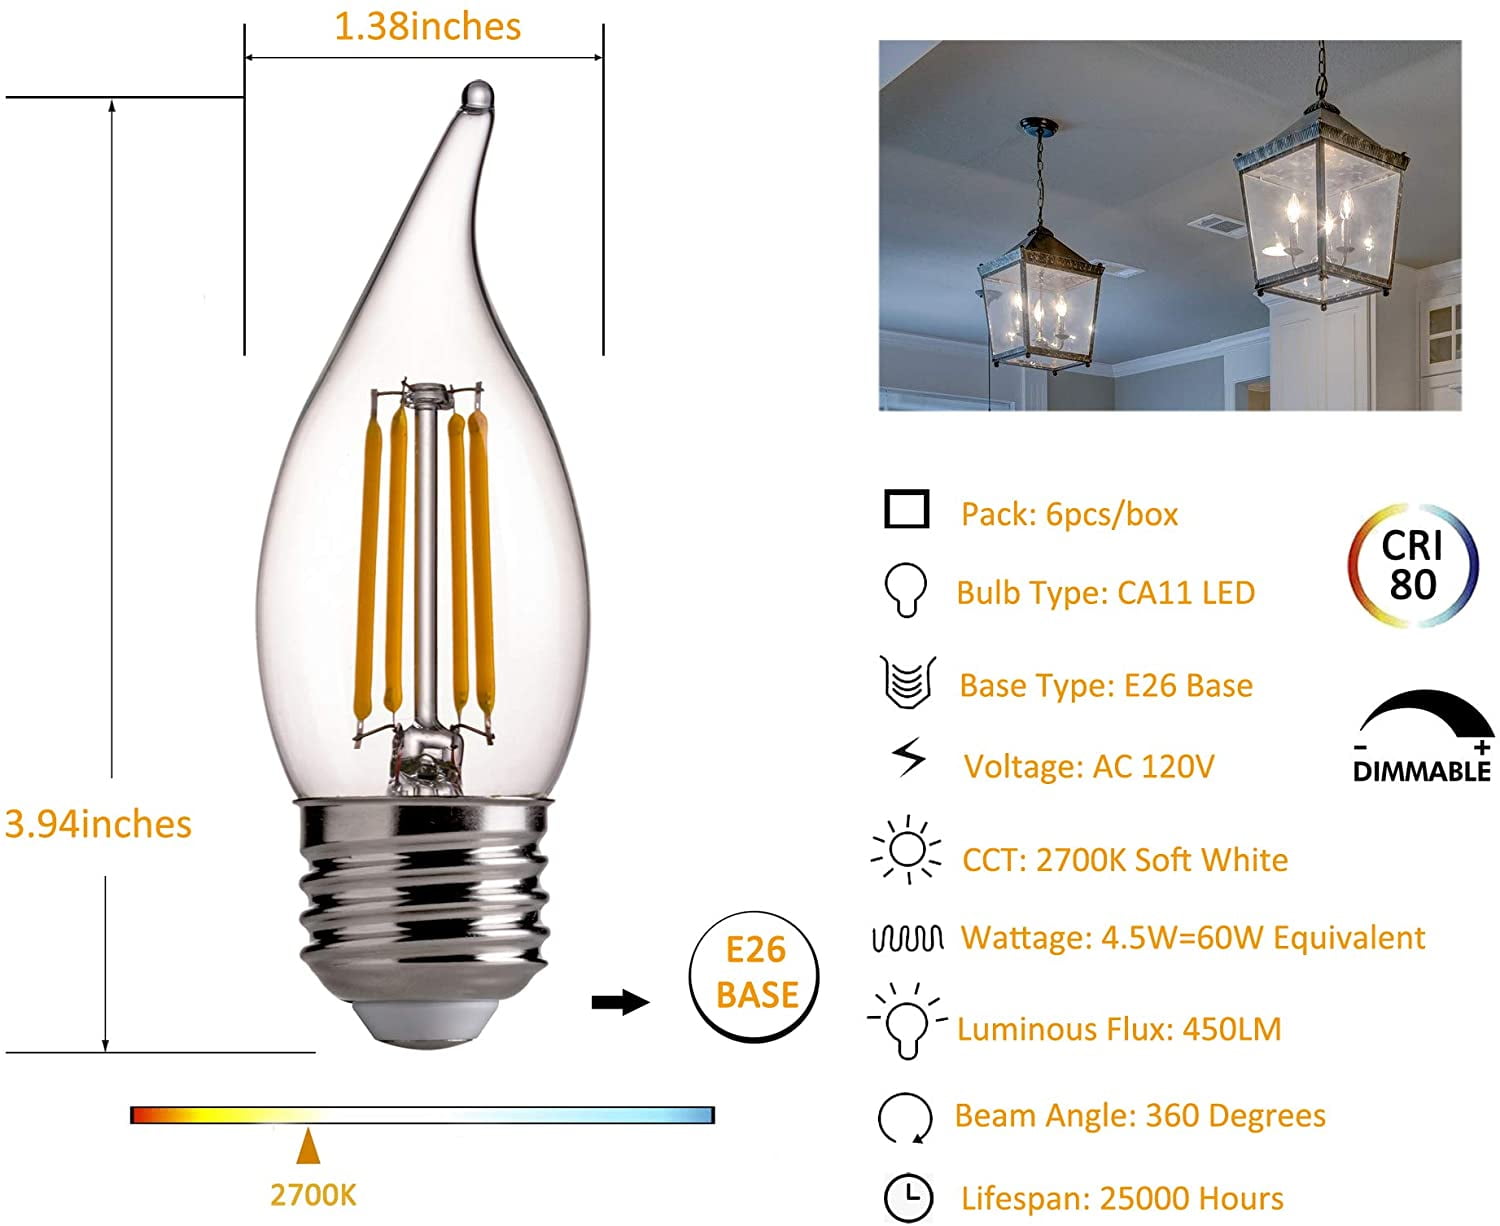 Ampoule LED Tungsram Standart A60 9w substitut 60w 850 lumens